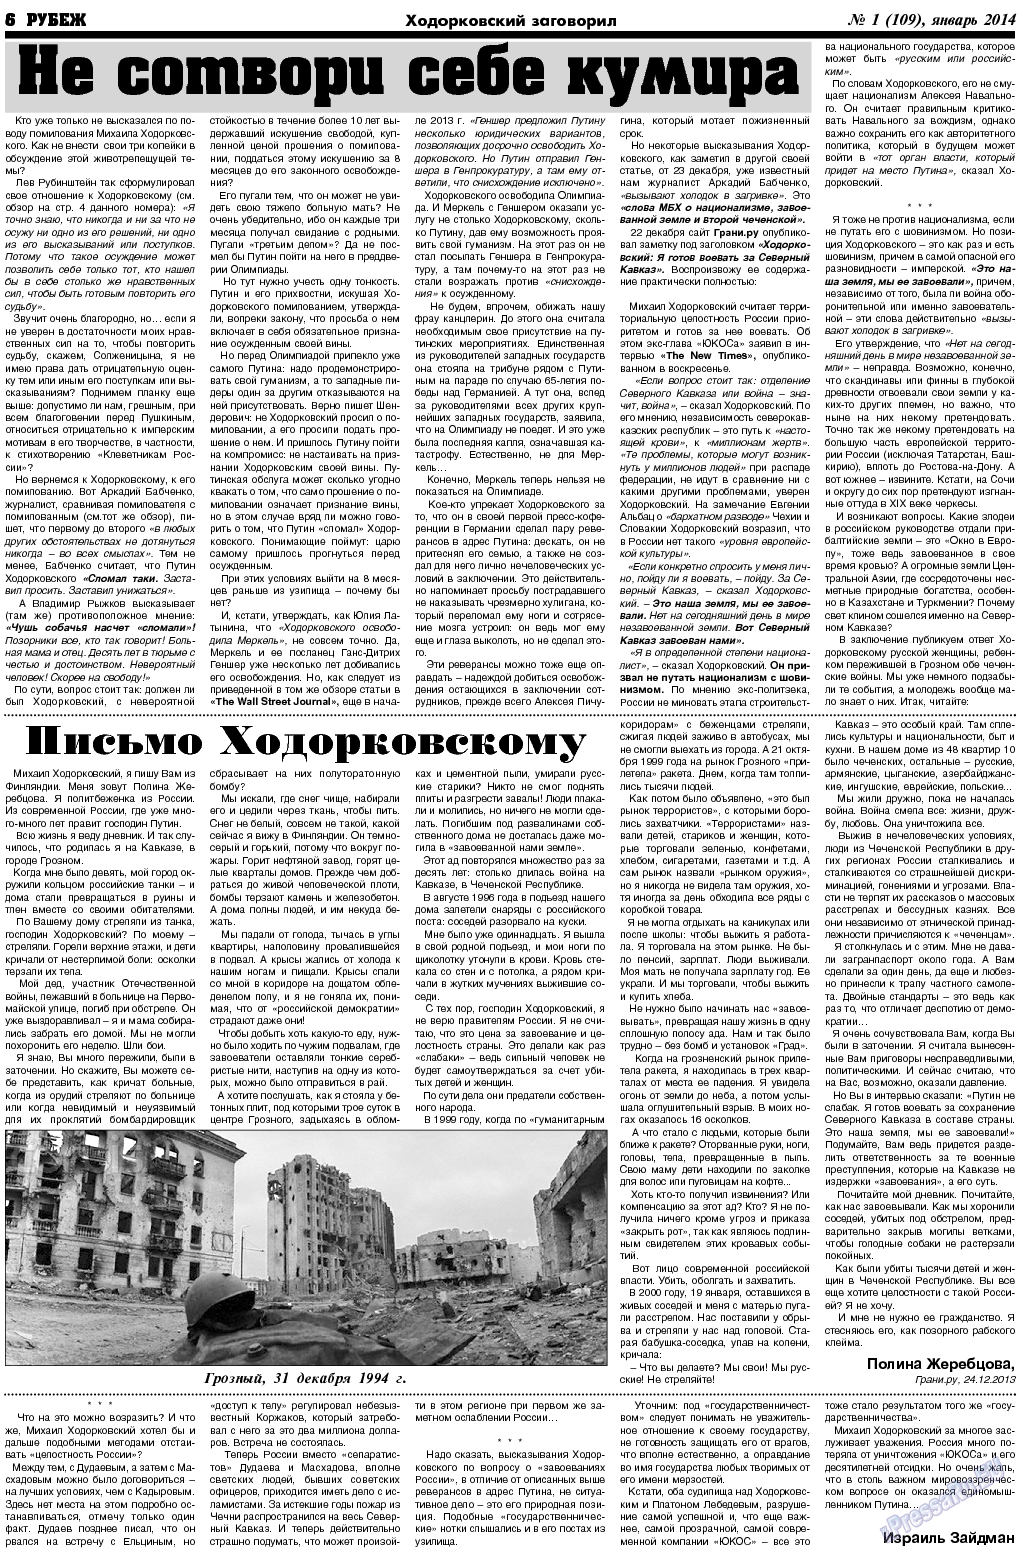 Рубеж, газета. 2014 №1 стр.6